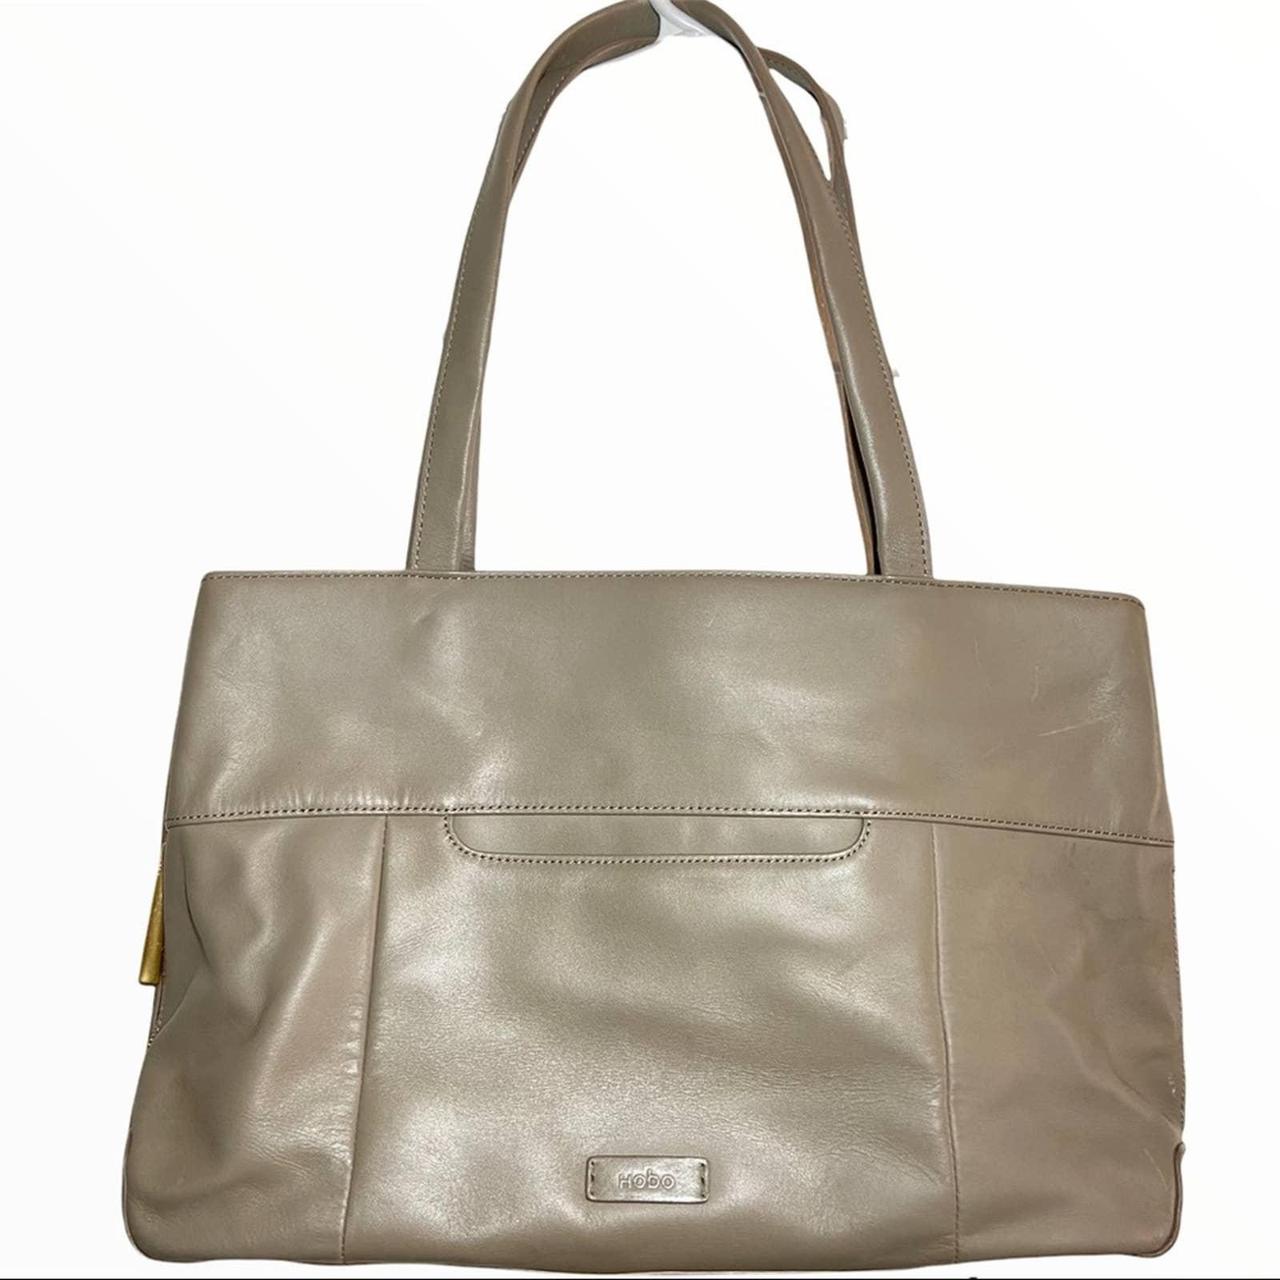 Hobo international crescent handbag - Gem